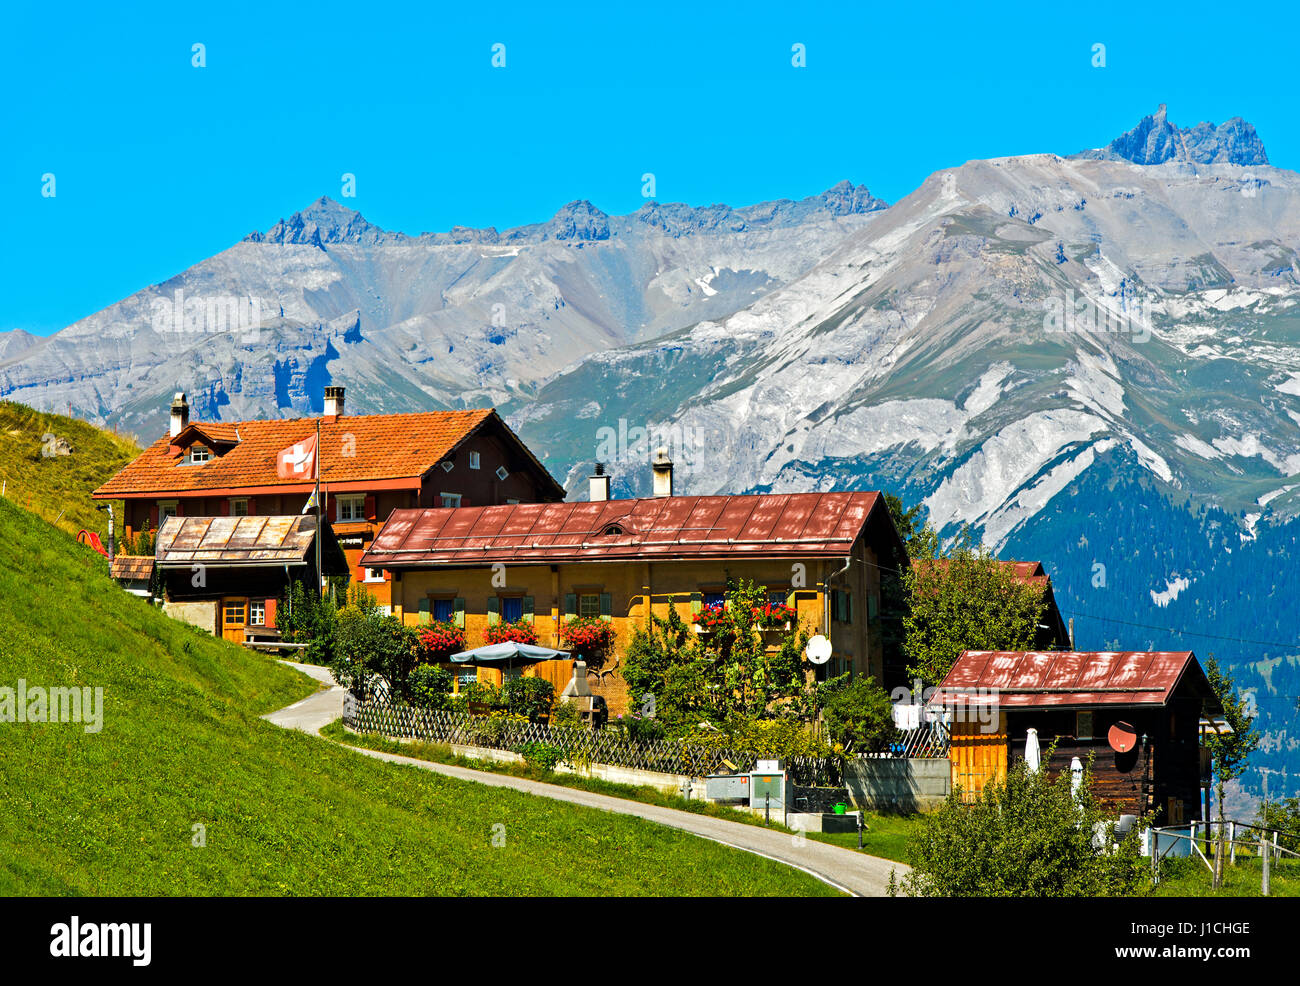 Hamlet Acla, Tenna, Safiental, behind to the right peak Ringelspitz, Grisons, Switzerland Stock Photo